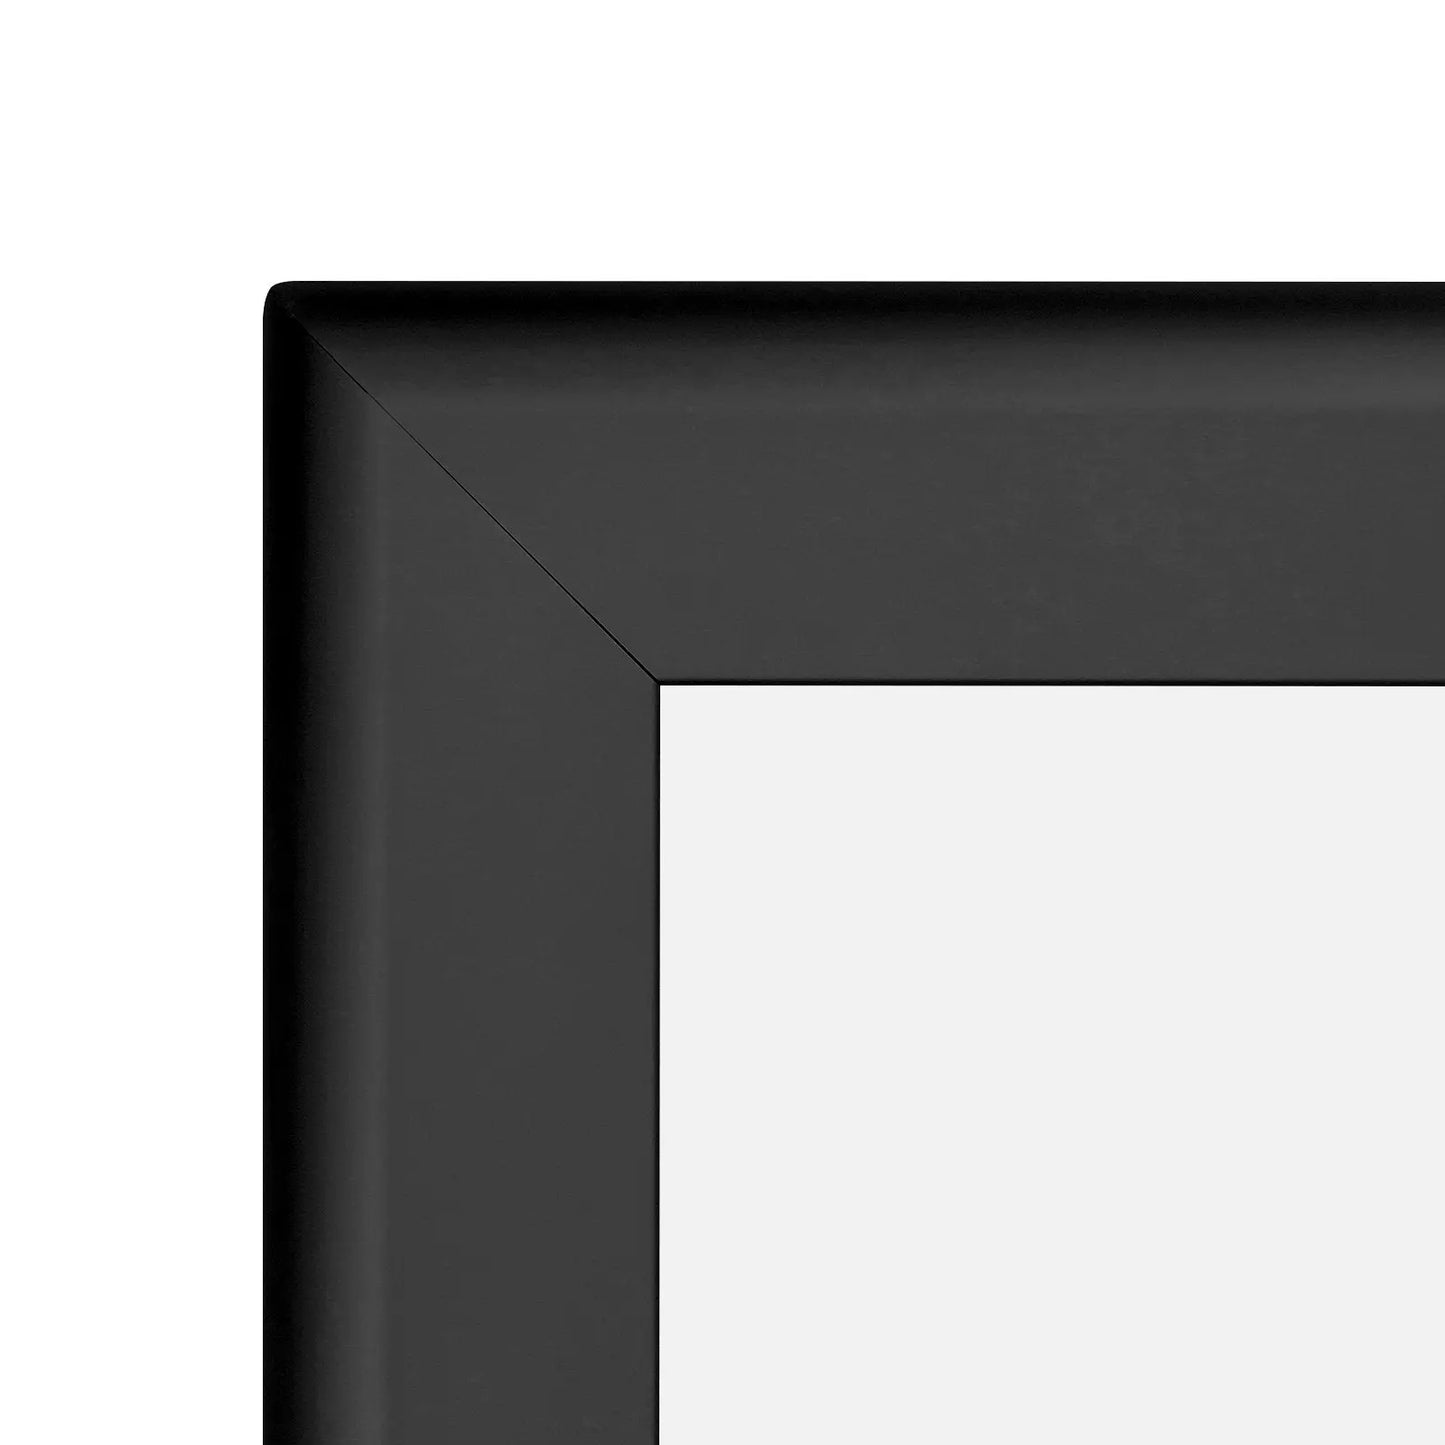 16x20 Black SnapeZo® Snap Frame - 1.7" Profile - Snap Frames Direct